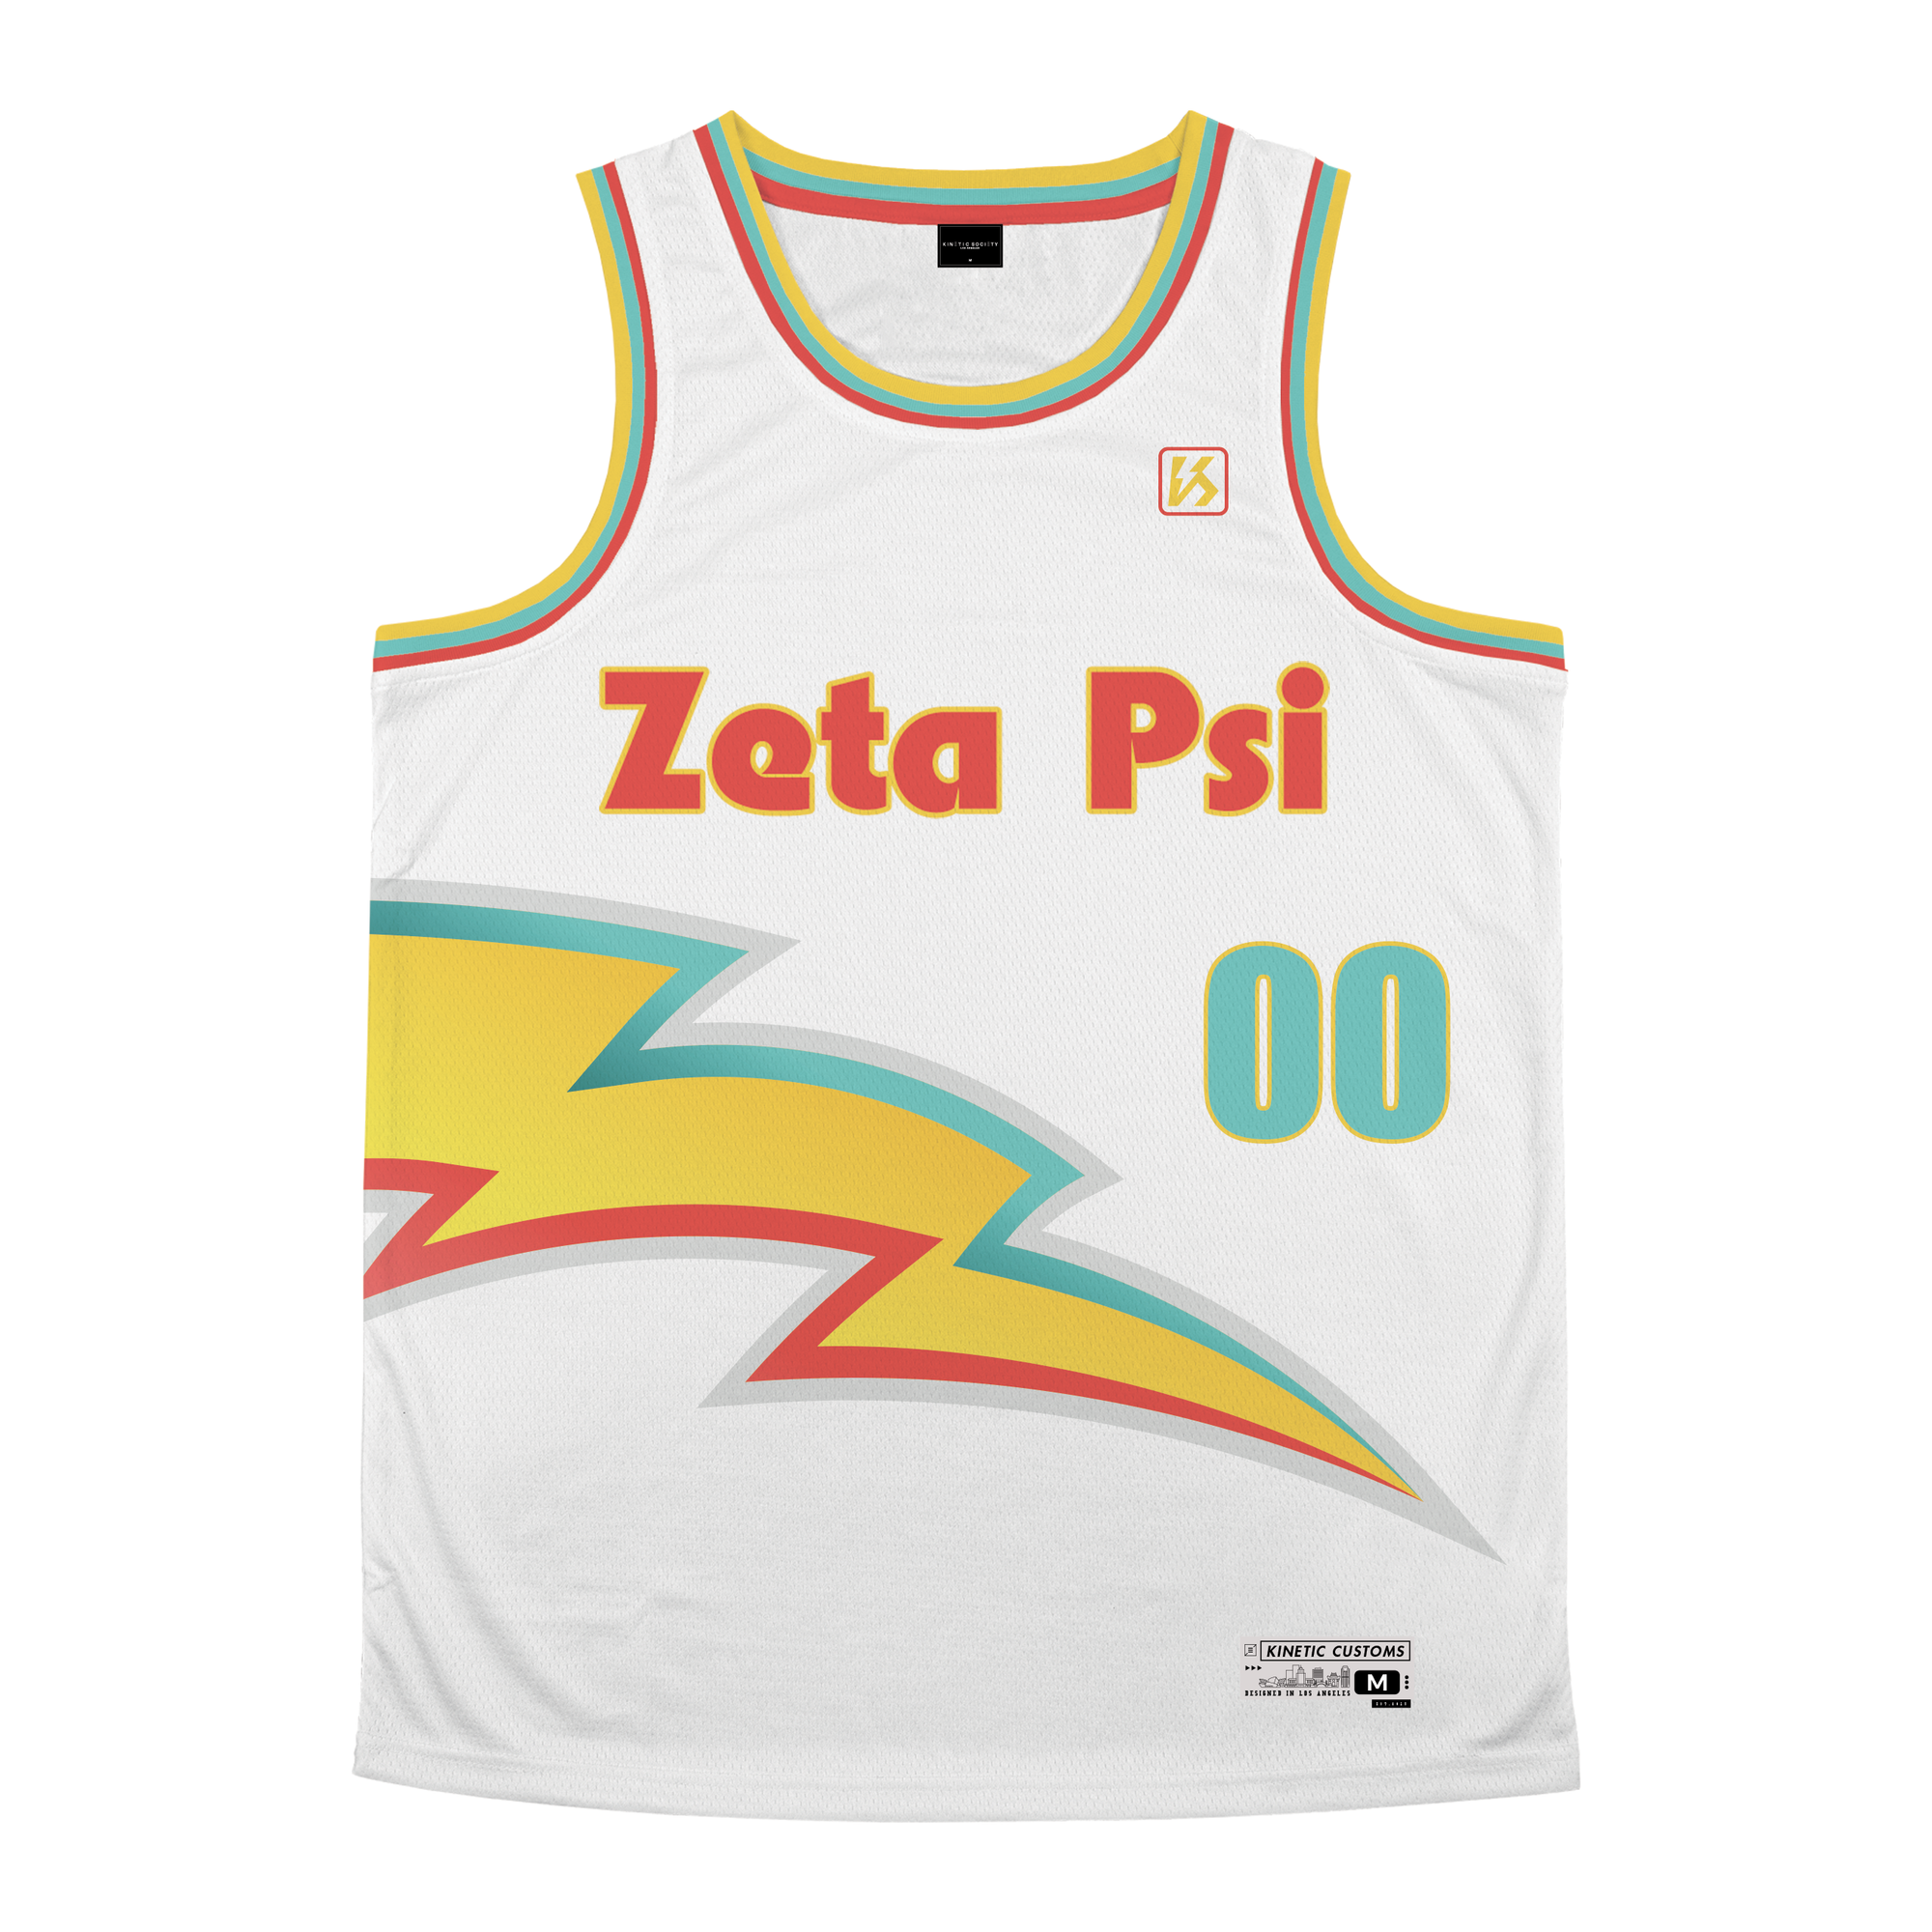 Zeta Psi - Bolt Basketball Jersey